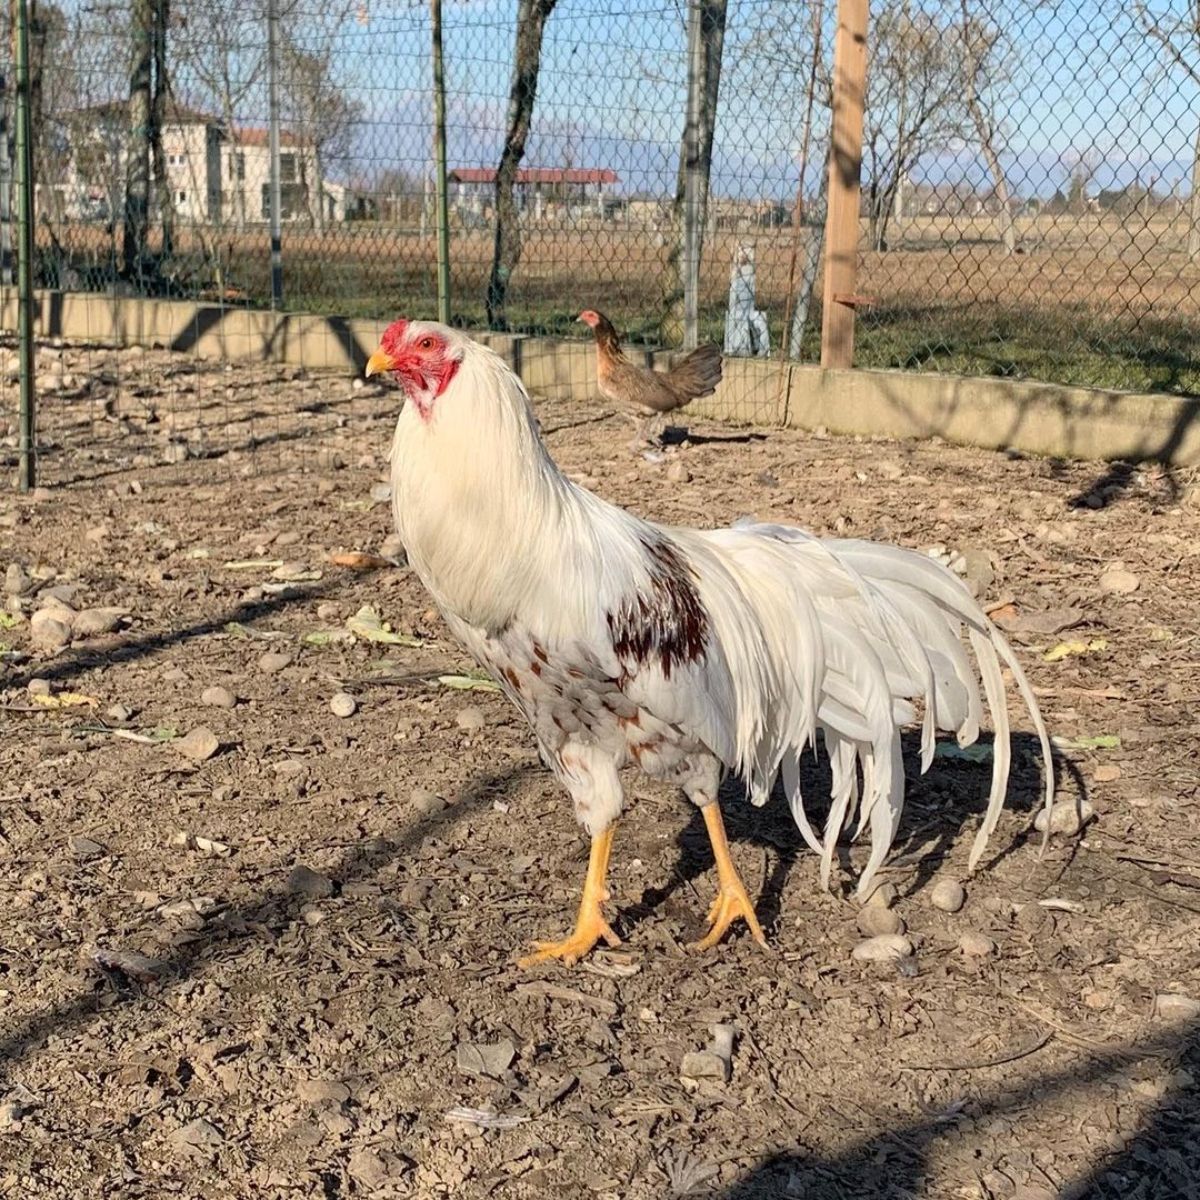 A tall-standing Yokohama rooster in a backyard.